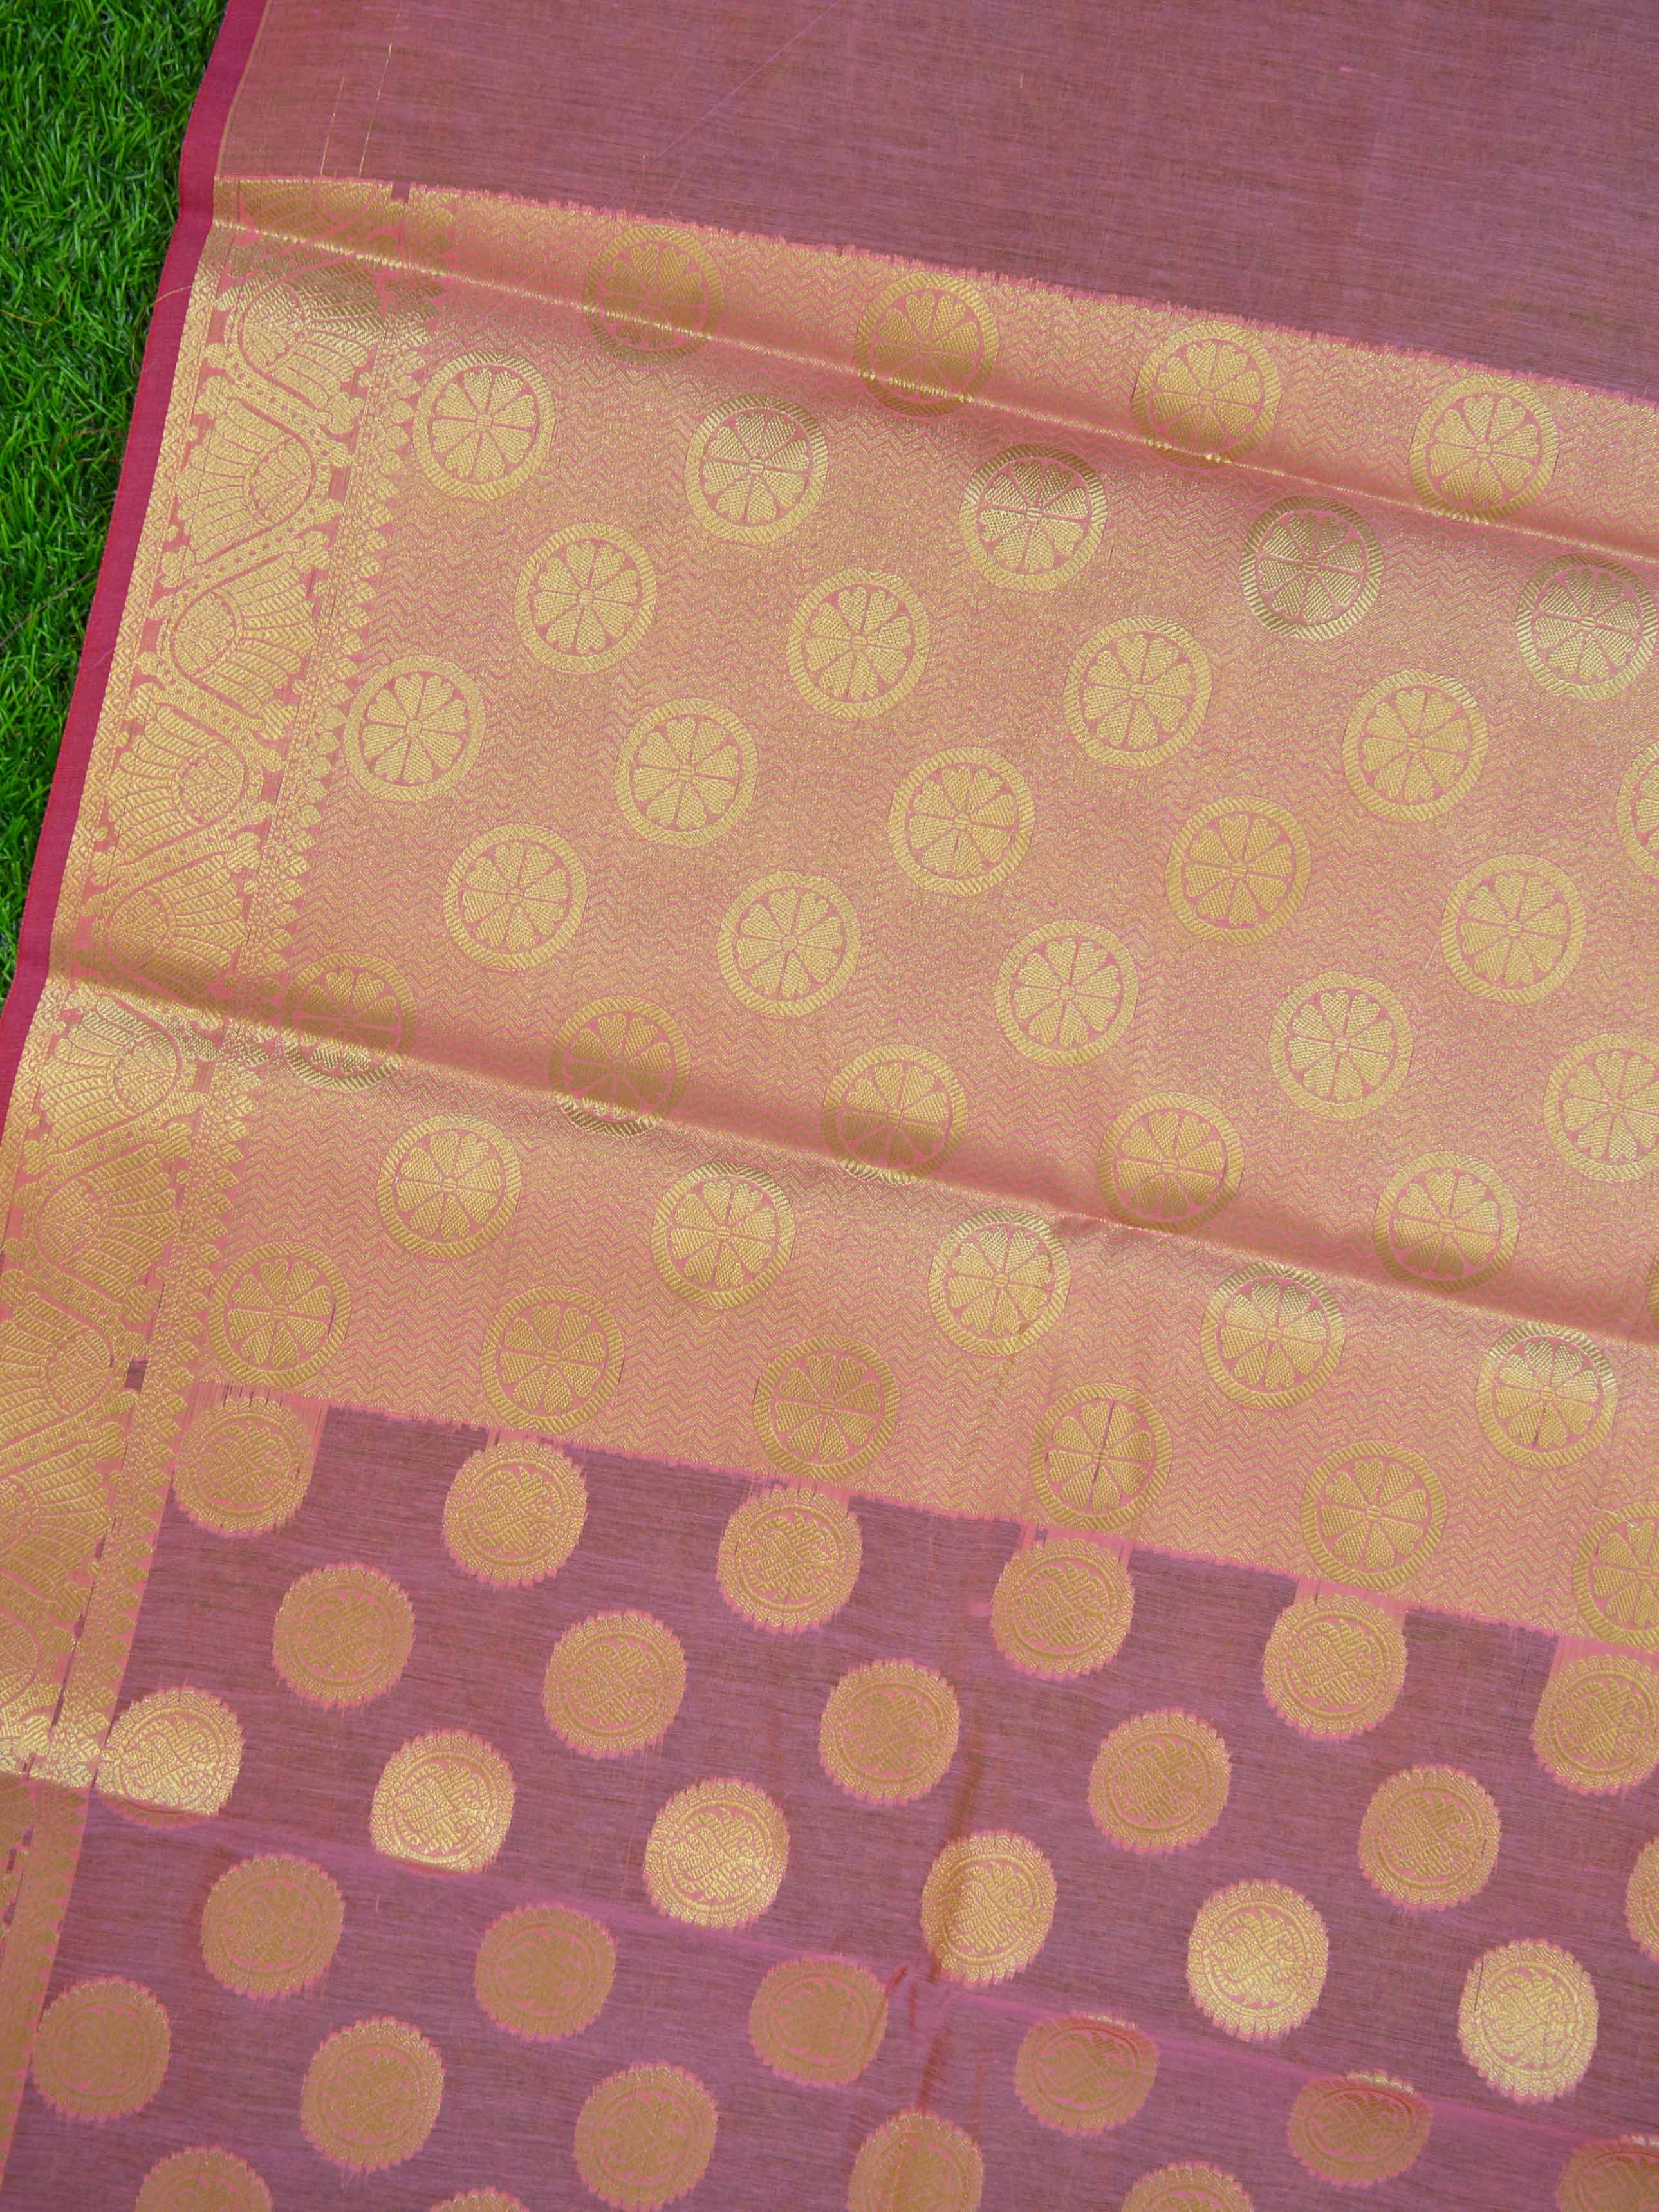 Banarasee Cotton Silk Mix Saree With Buta Design-Peach